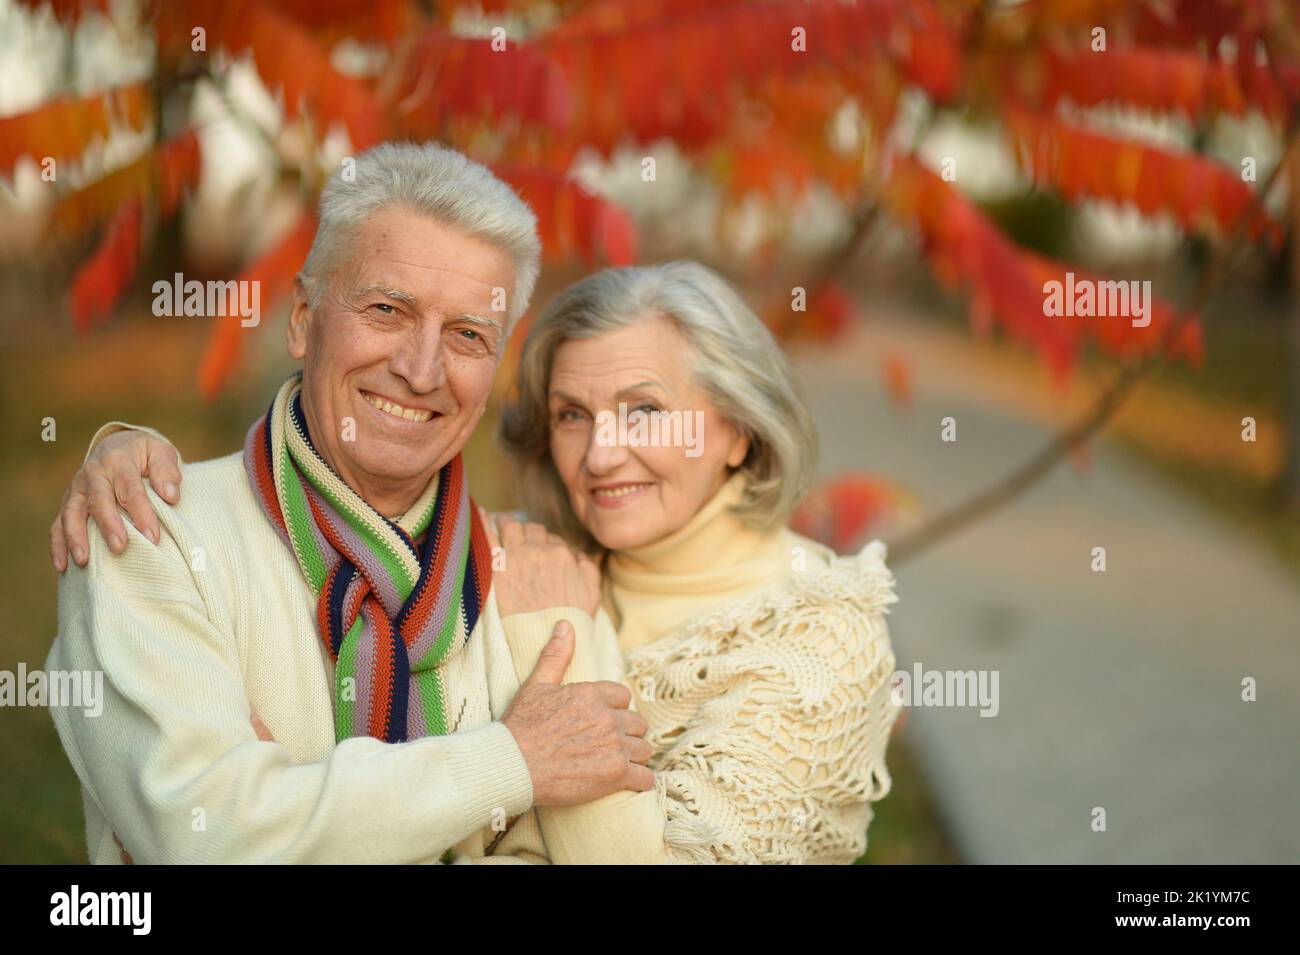 Nice elderly couple in a autumn park Stock Photo